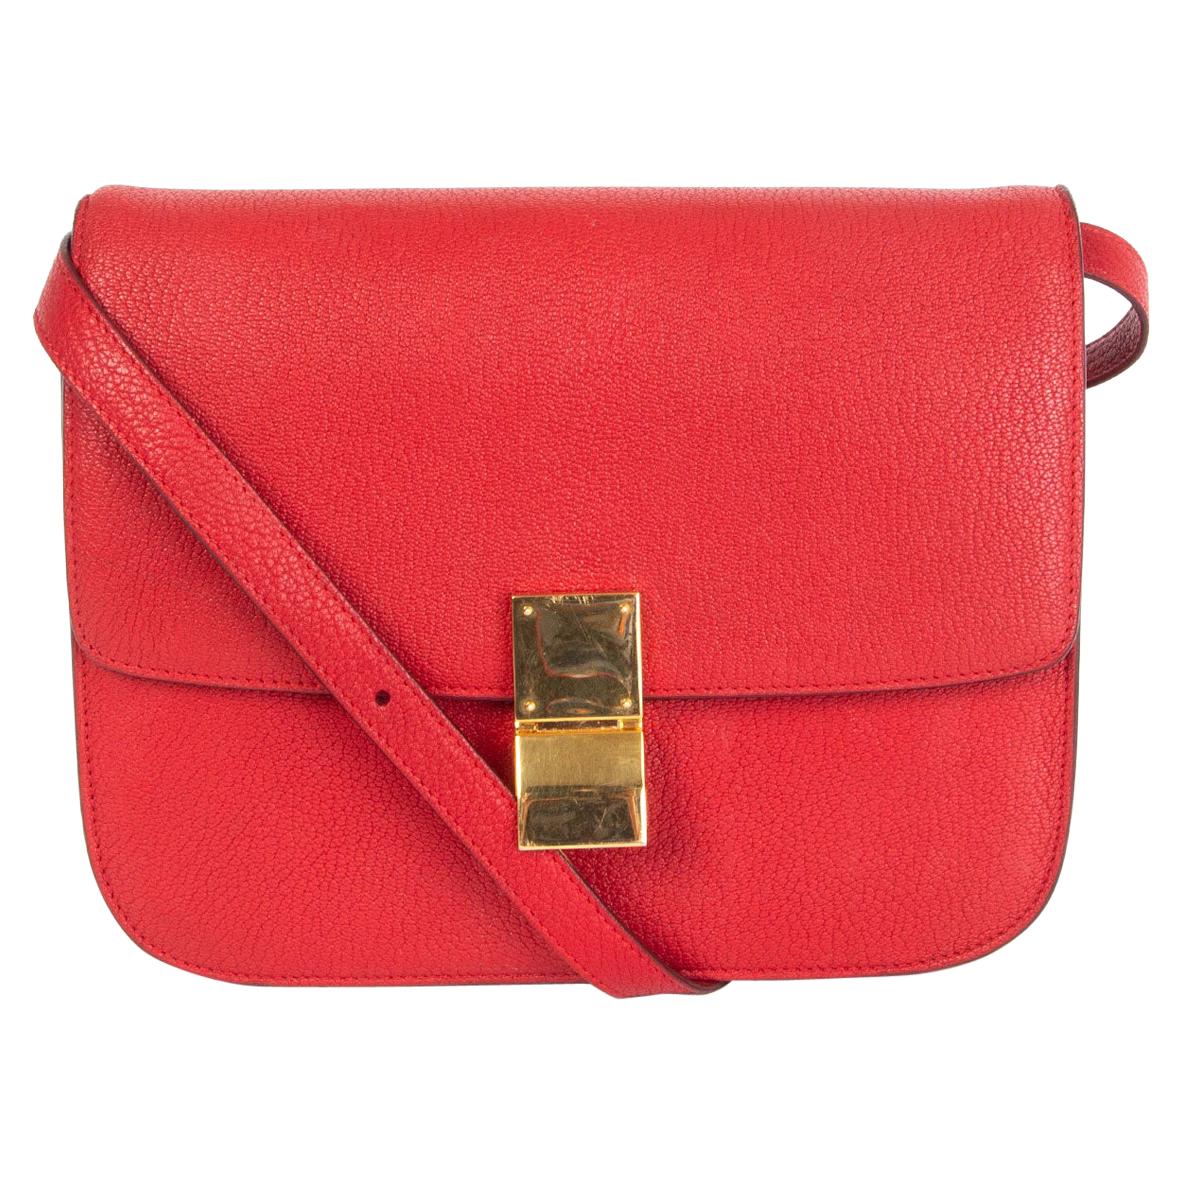 CELINE Carmin red goatskin leather CLASSIC MEDIUM BOX Shoulder Bag